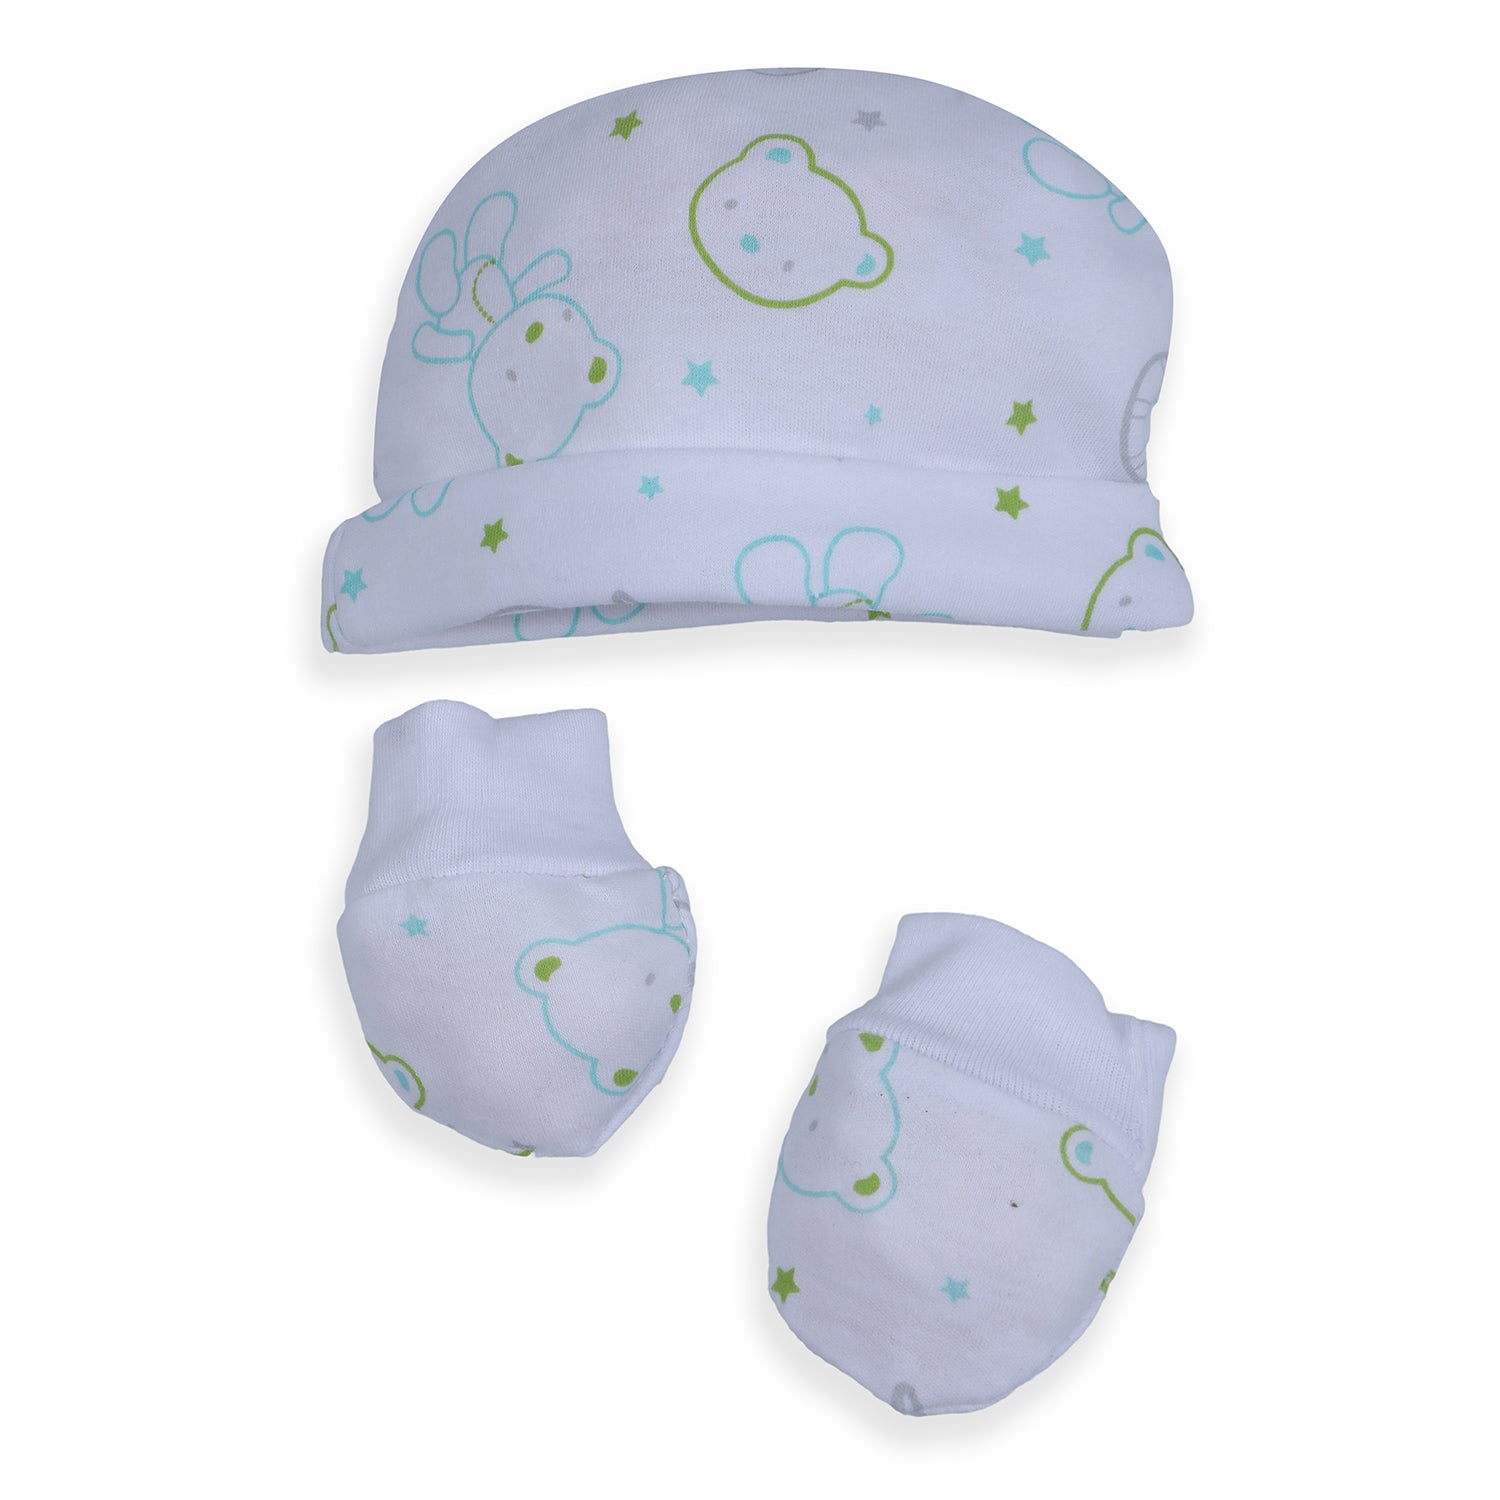 Baby Moo Papa Bear Infant Soft 5 pcs Romper Gift Set - White